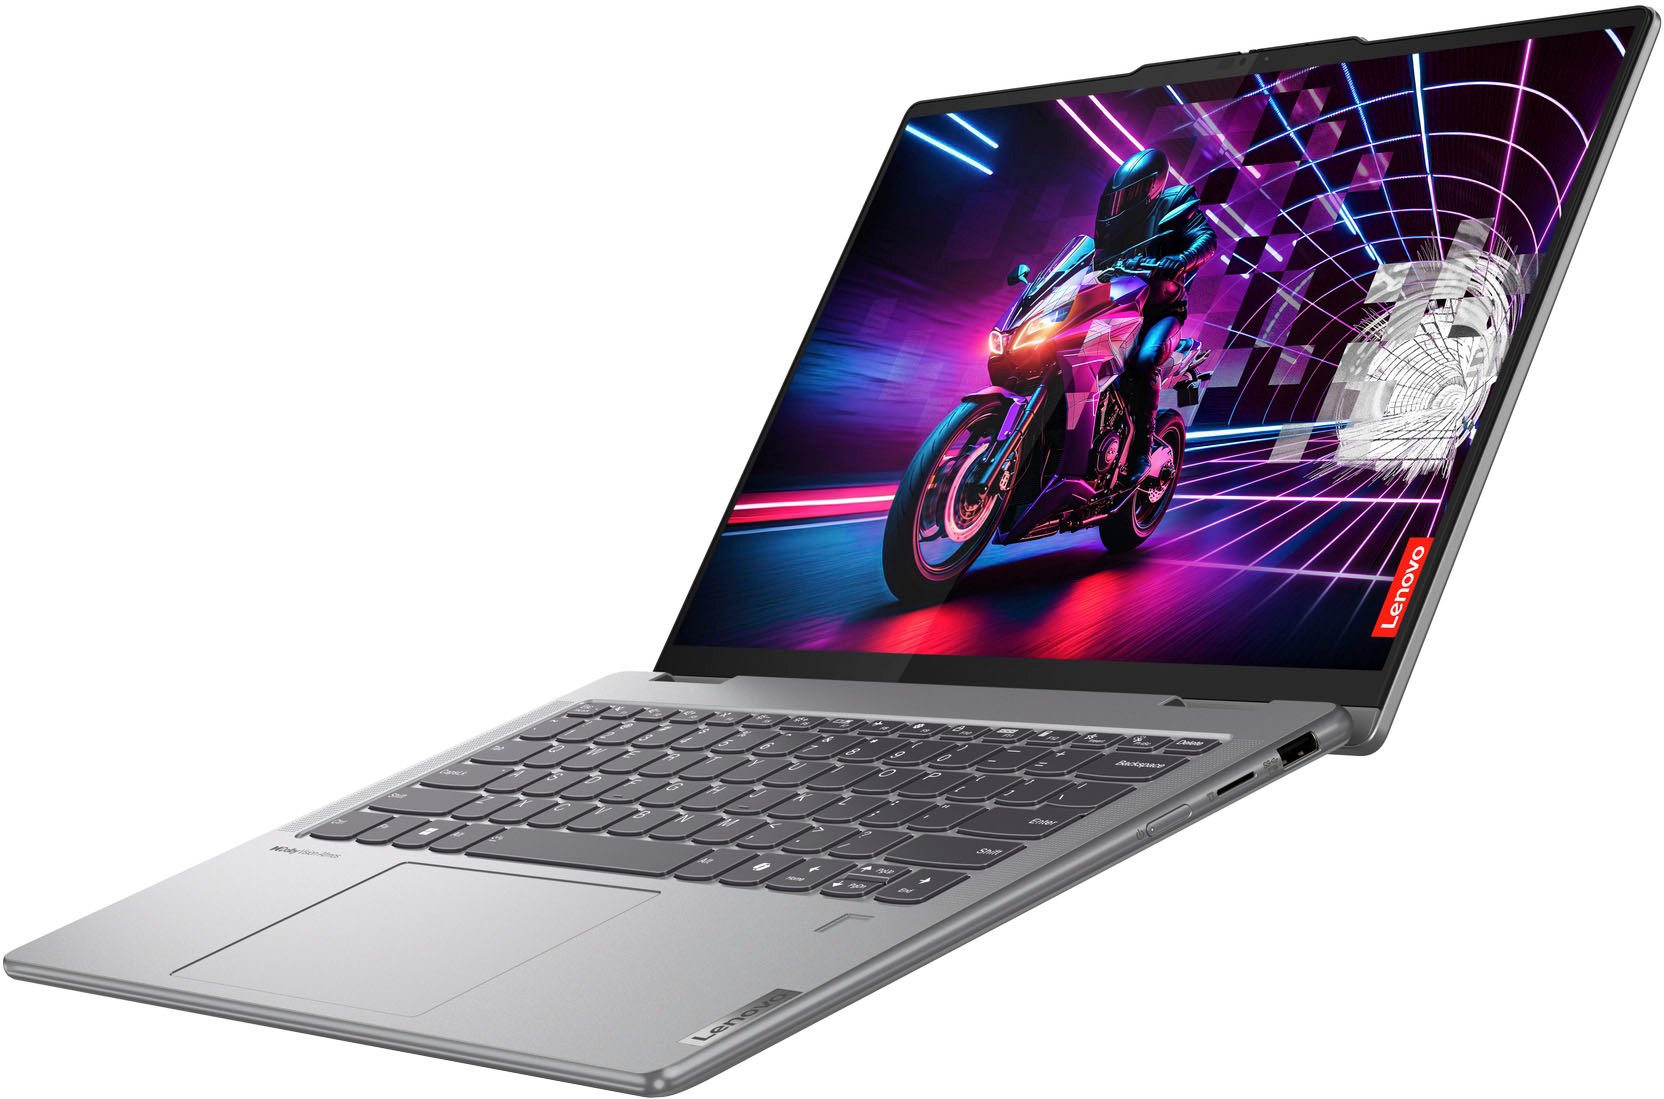 Yoga 7 (14, Gen 7) AMD, Lightweight AMD-powered 2-in-1 laptop